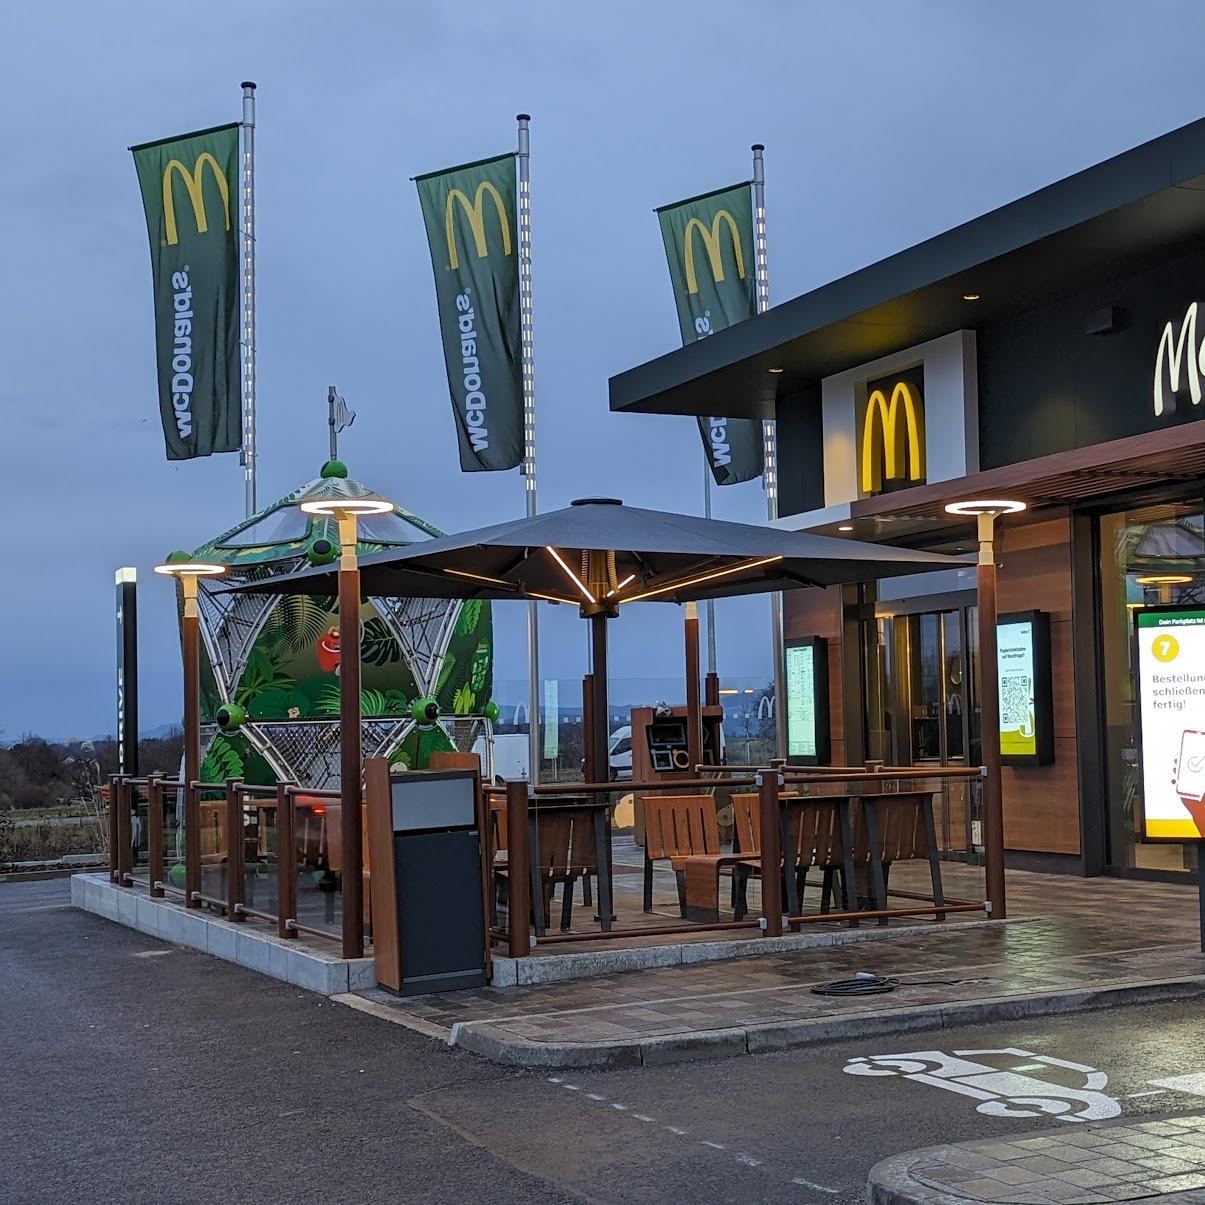 Restaurant "McDonald‘s" in Aichtal